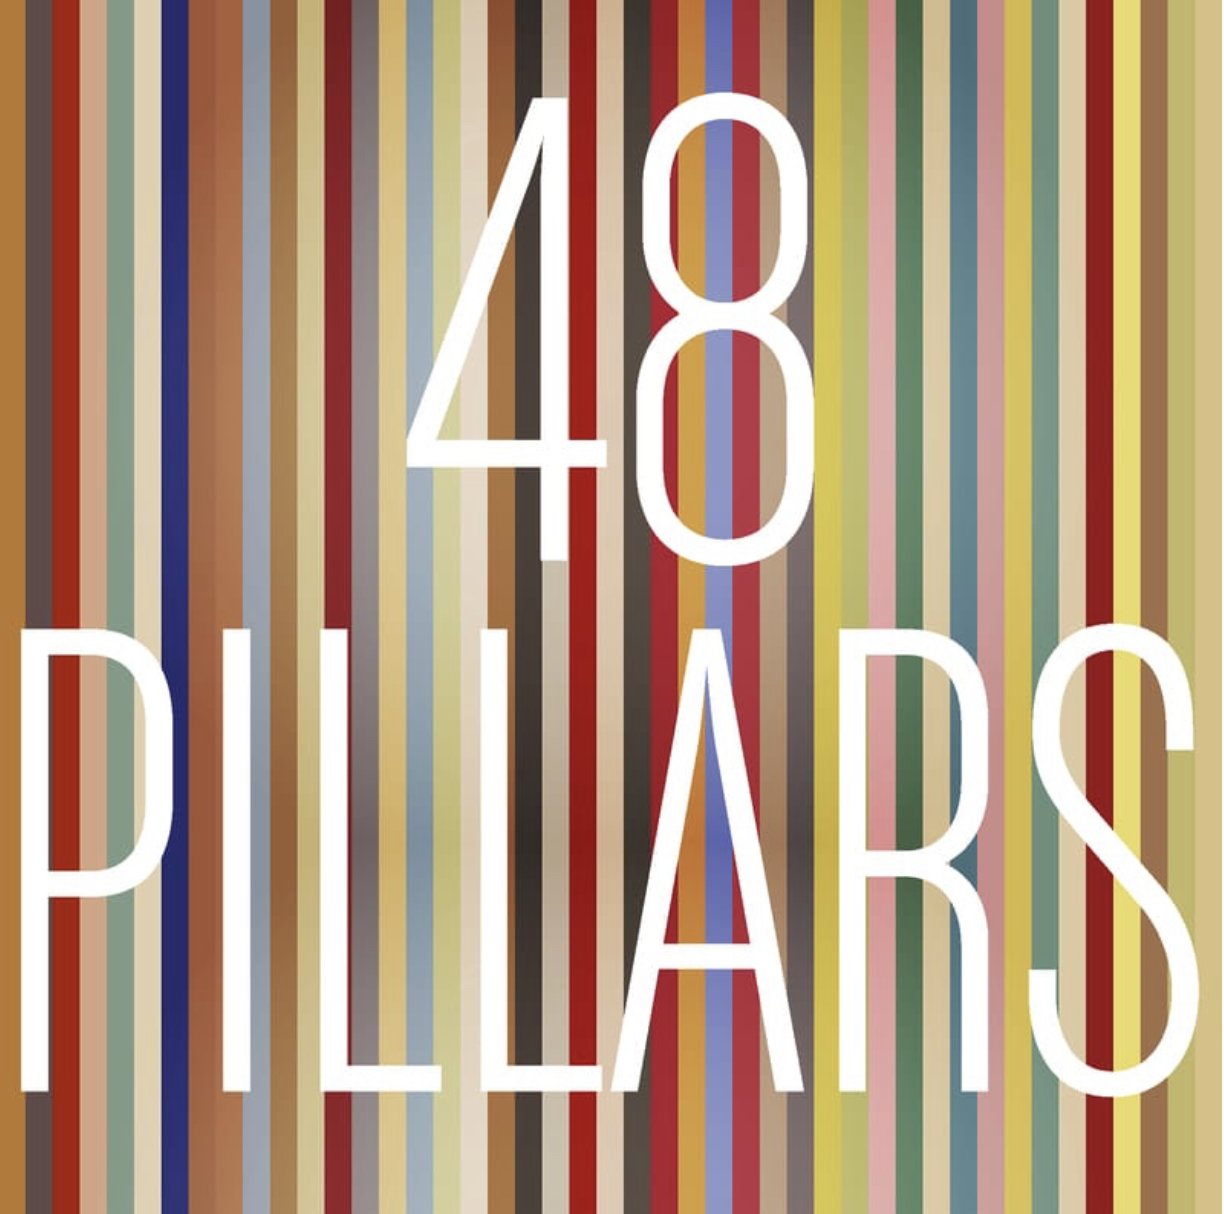 Group Exhibition “48 Pillars”